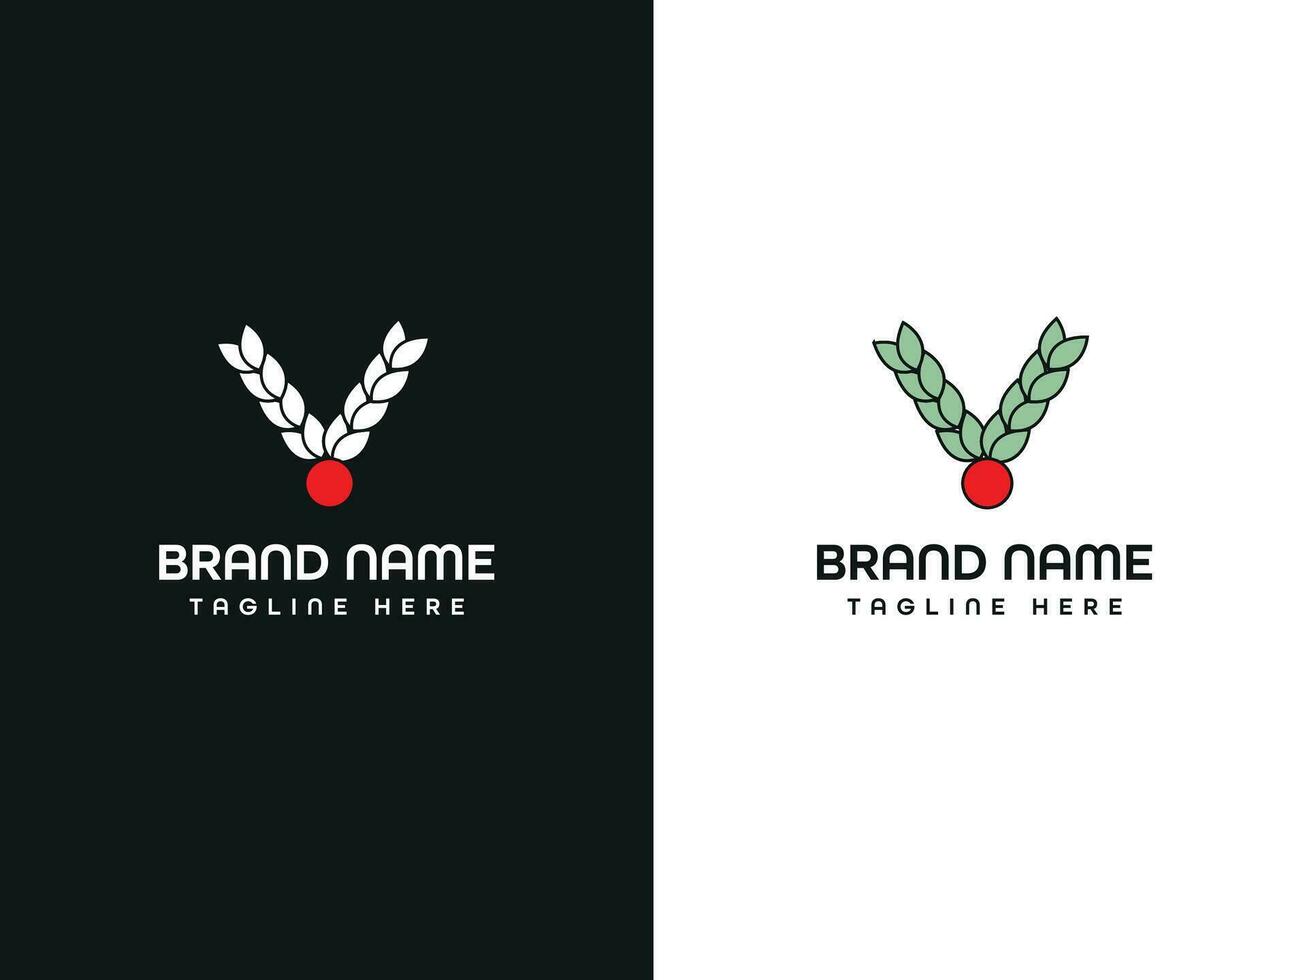 Brief-Logo-Design vektor